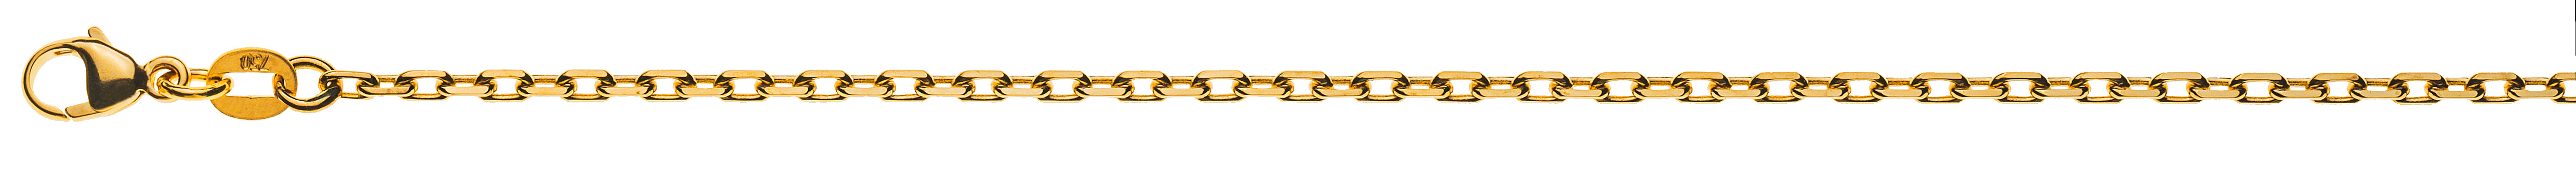 AURONOS Prestige Necklace yellow gold 18K 4-fold polished anchor 55cm 2.1mm